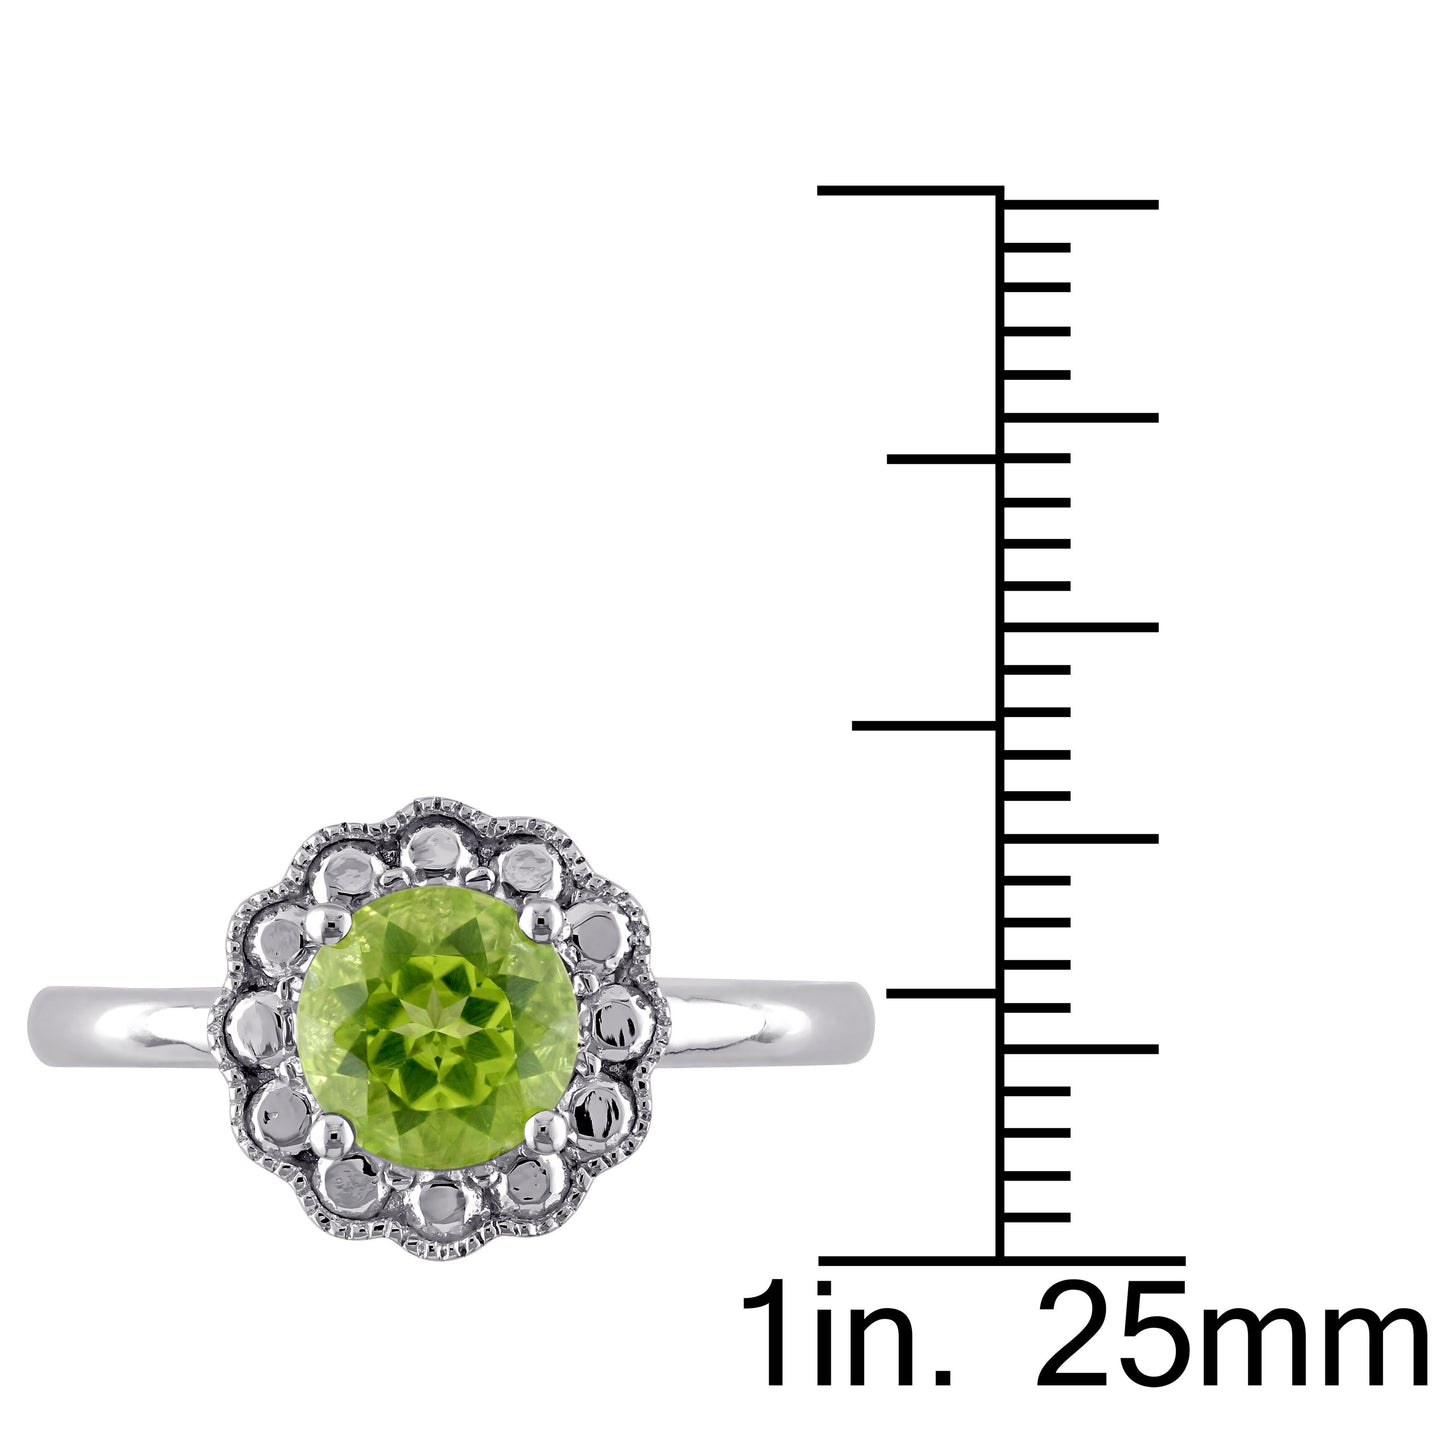 1 1/10ct Peridot Flower Birthstone Ring in 10k White Gold